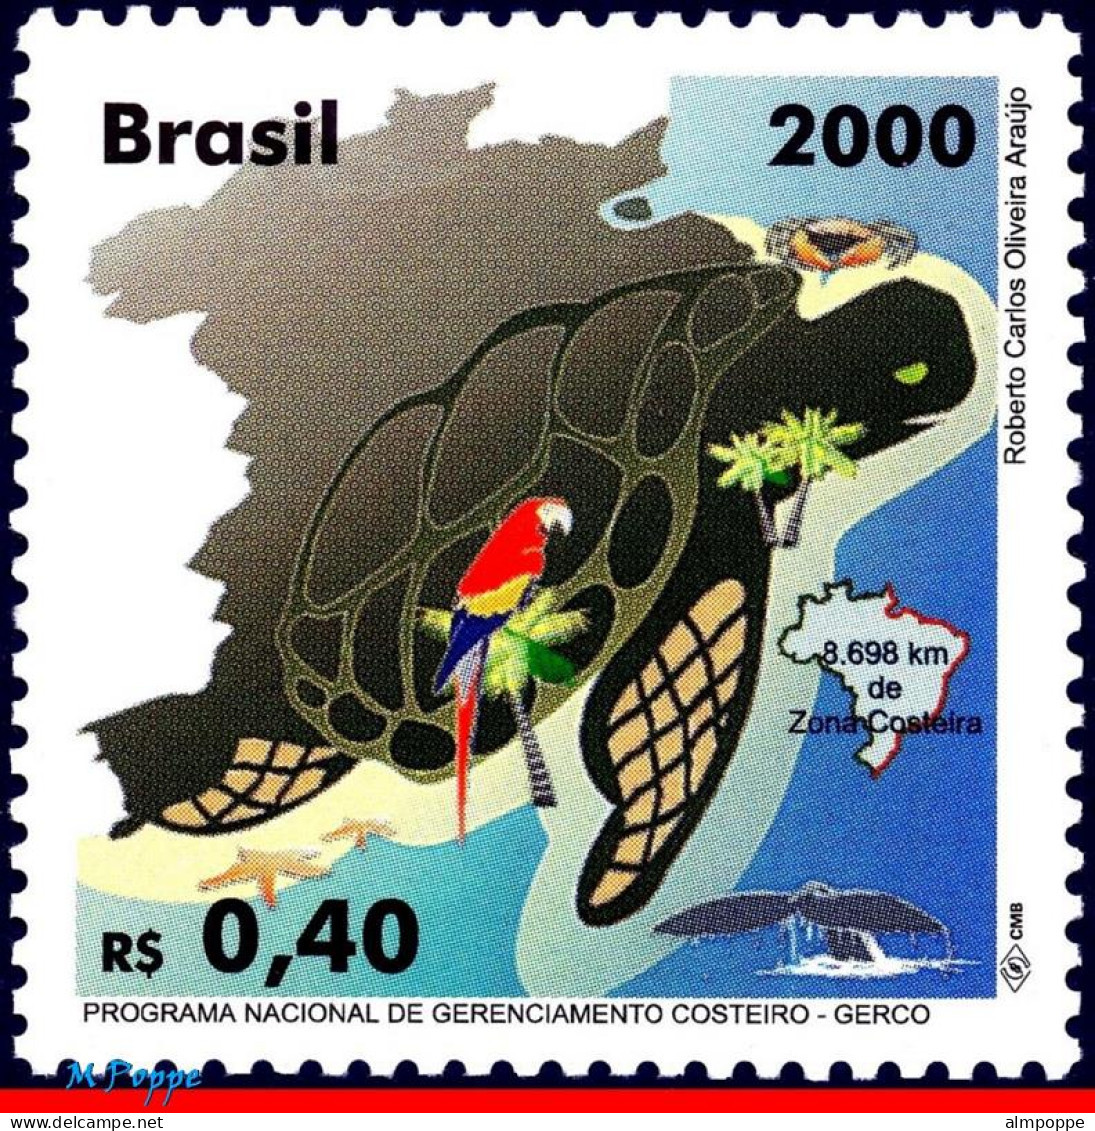 Ref. BR-2742 BRAZIL 2000 - GERCO, COASTAL ZONE,PARROT, TURTLE, WHALE, MI# 3028, MNH, MAPS 1V Sc# 2742 - Unused Stamps